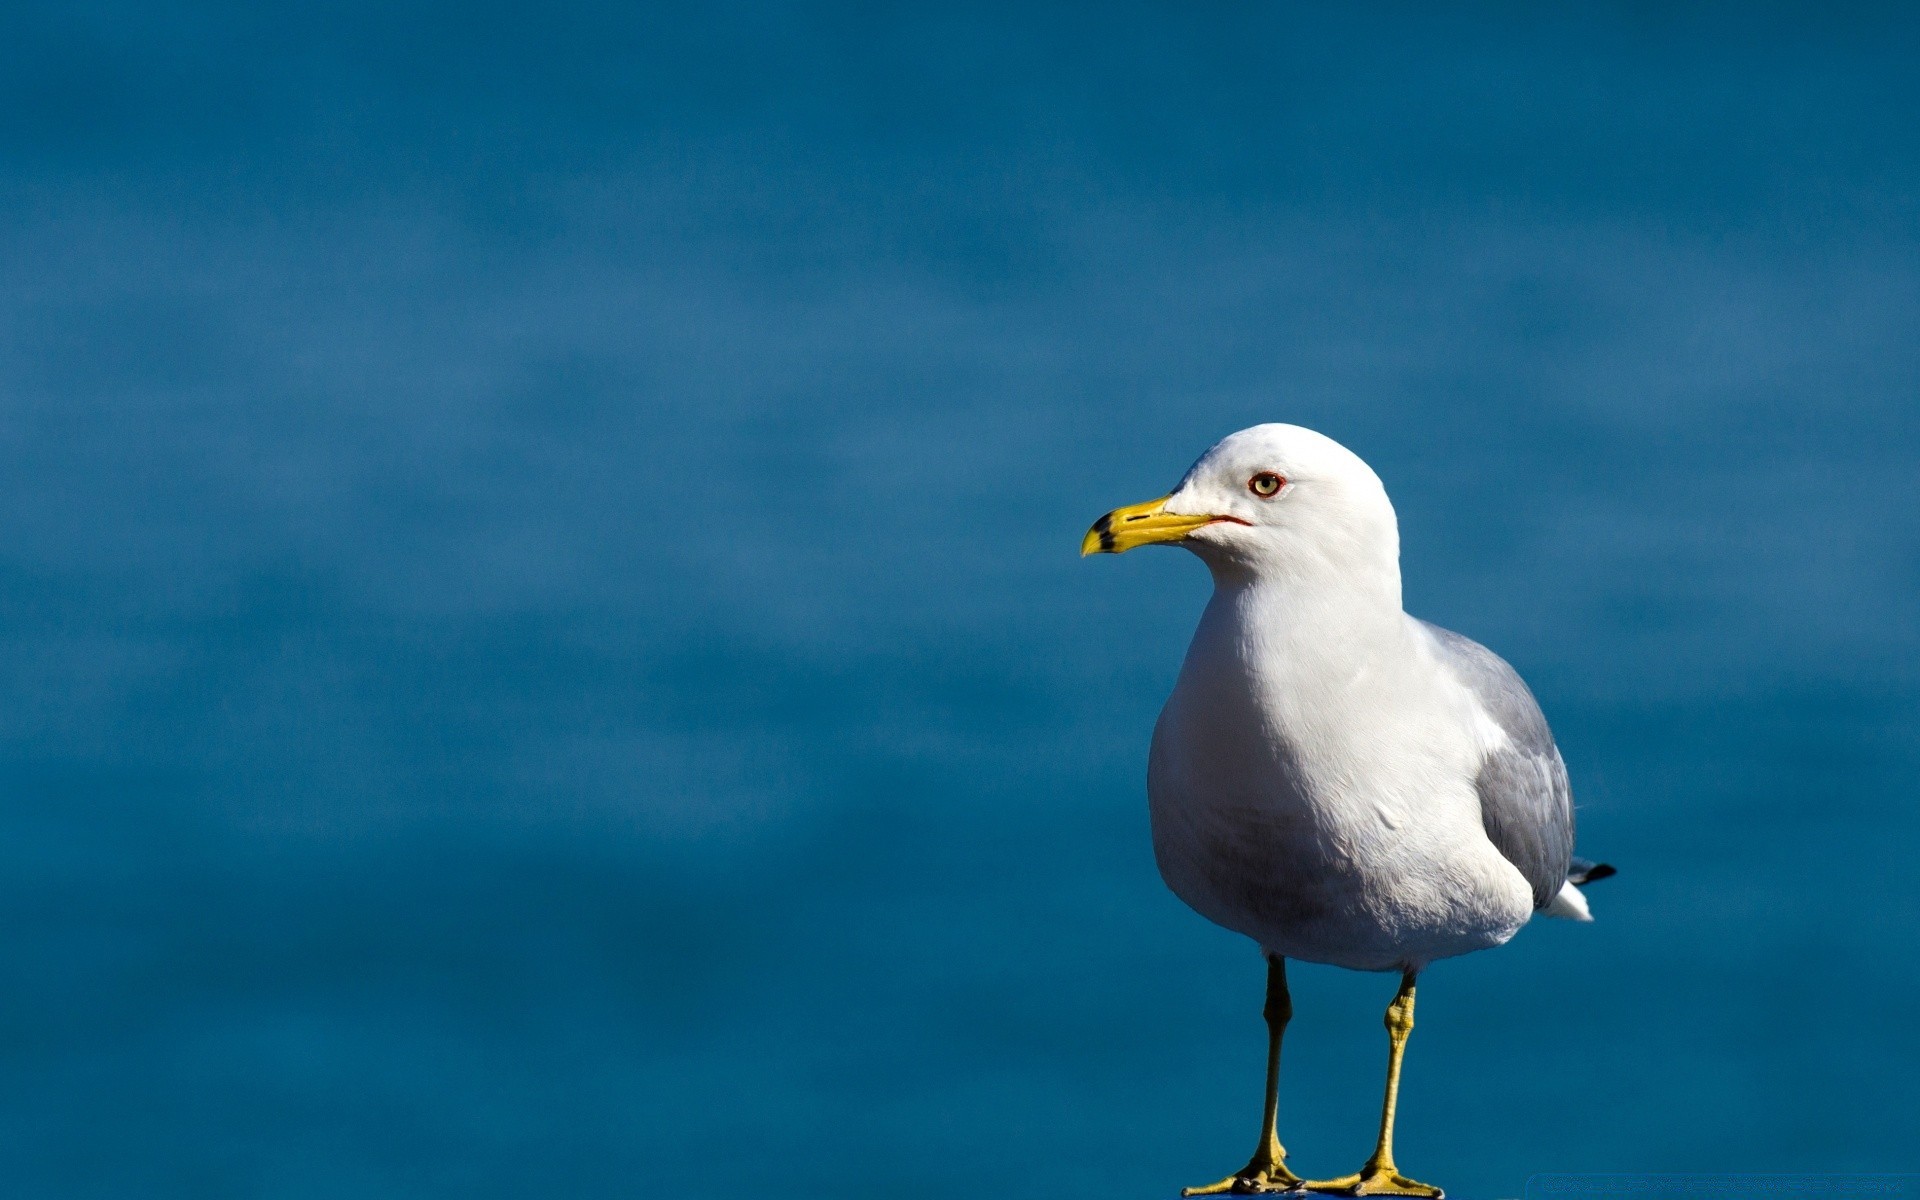 seagull bird seagulls wildlife outdoors nature water sky